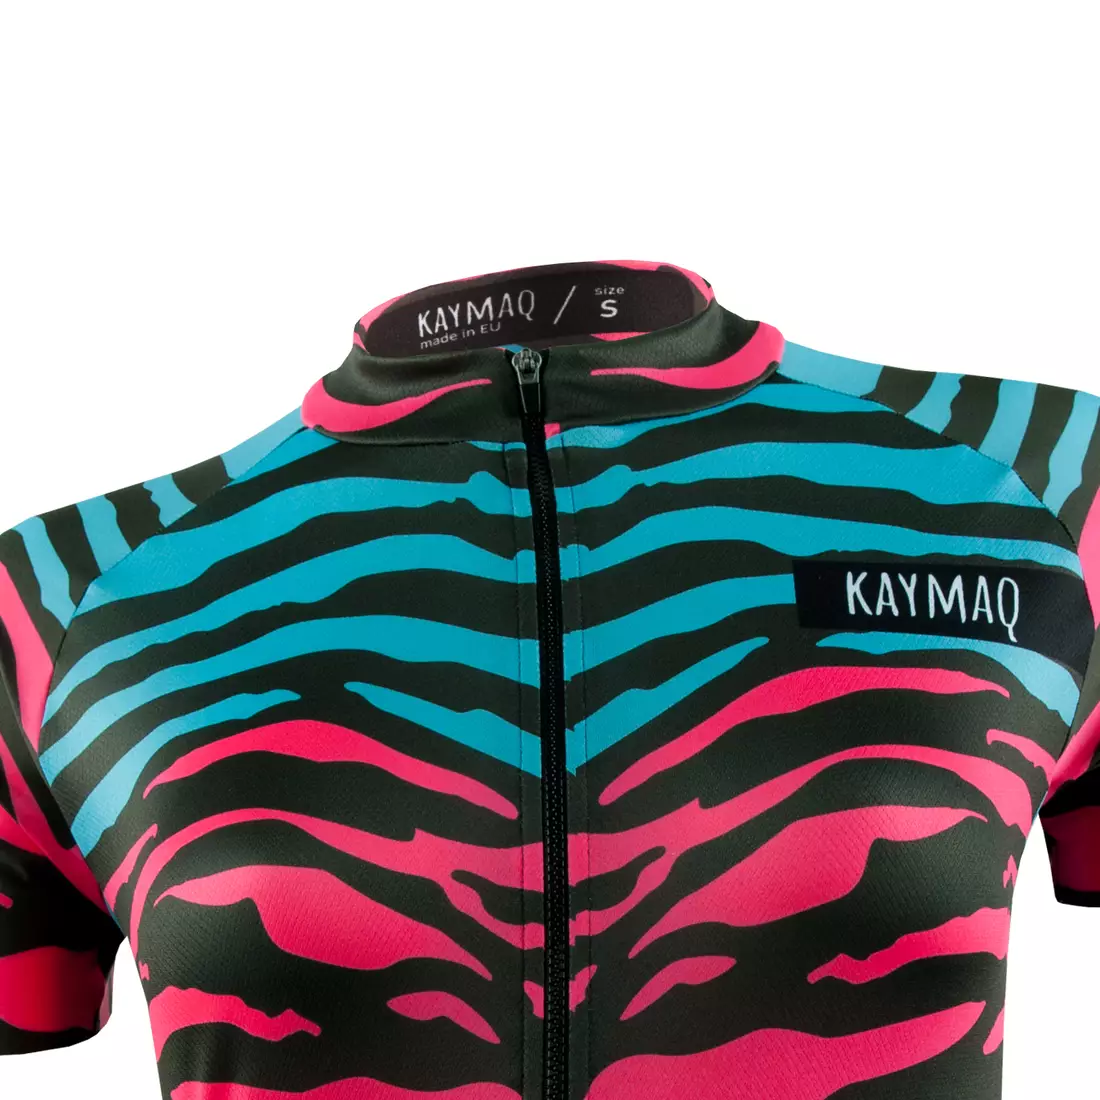 KAYMAQ DESIGN W1-W40 Women's cycling short sleeve jersey